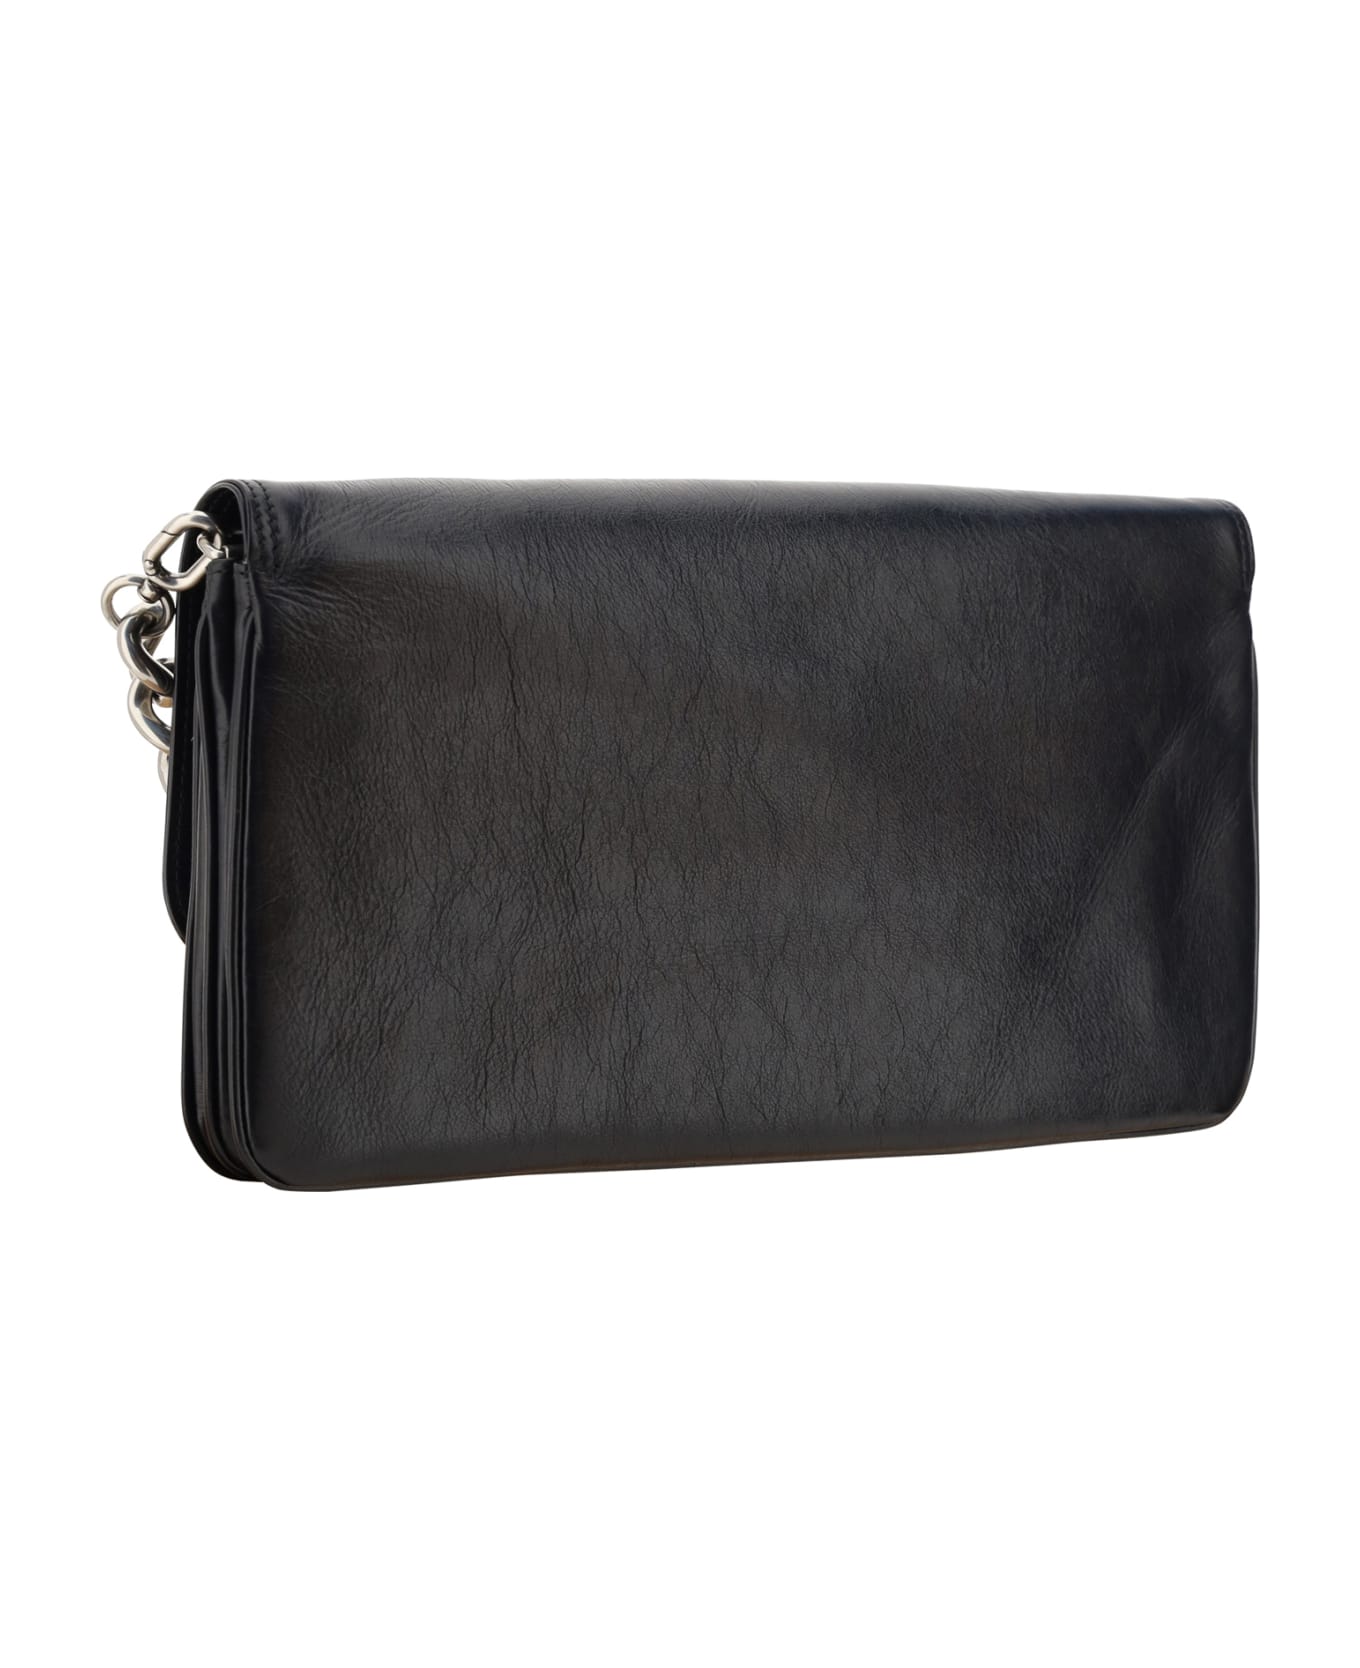 Balenciaga Bb Soft Large Flap Bag - Black